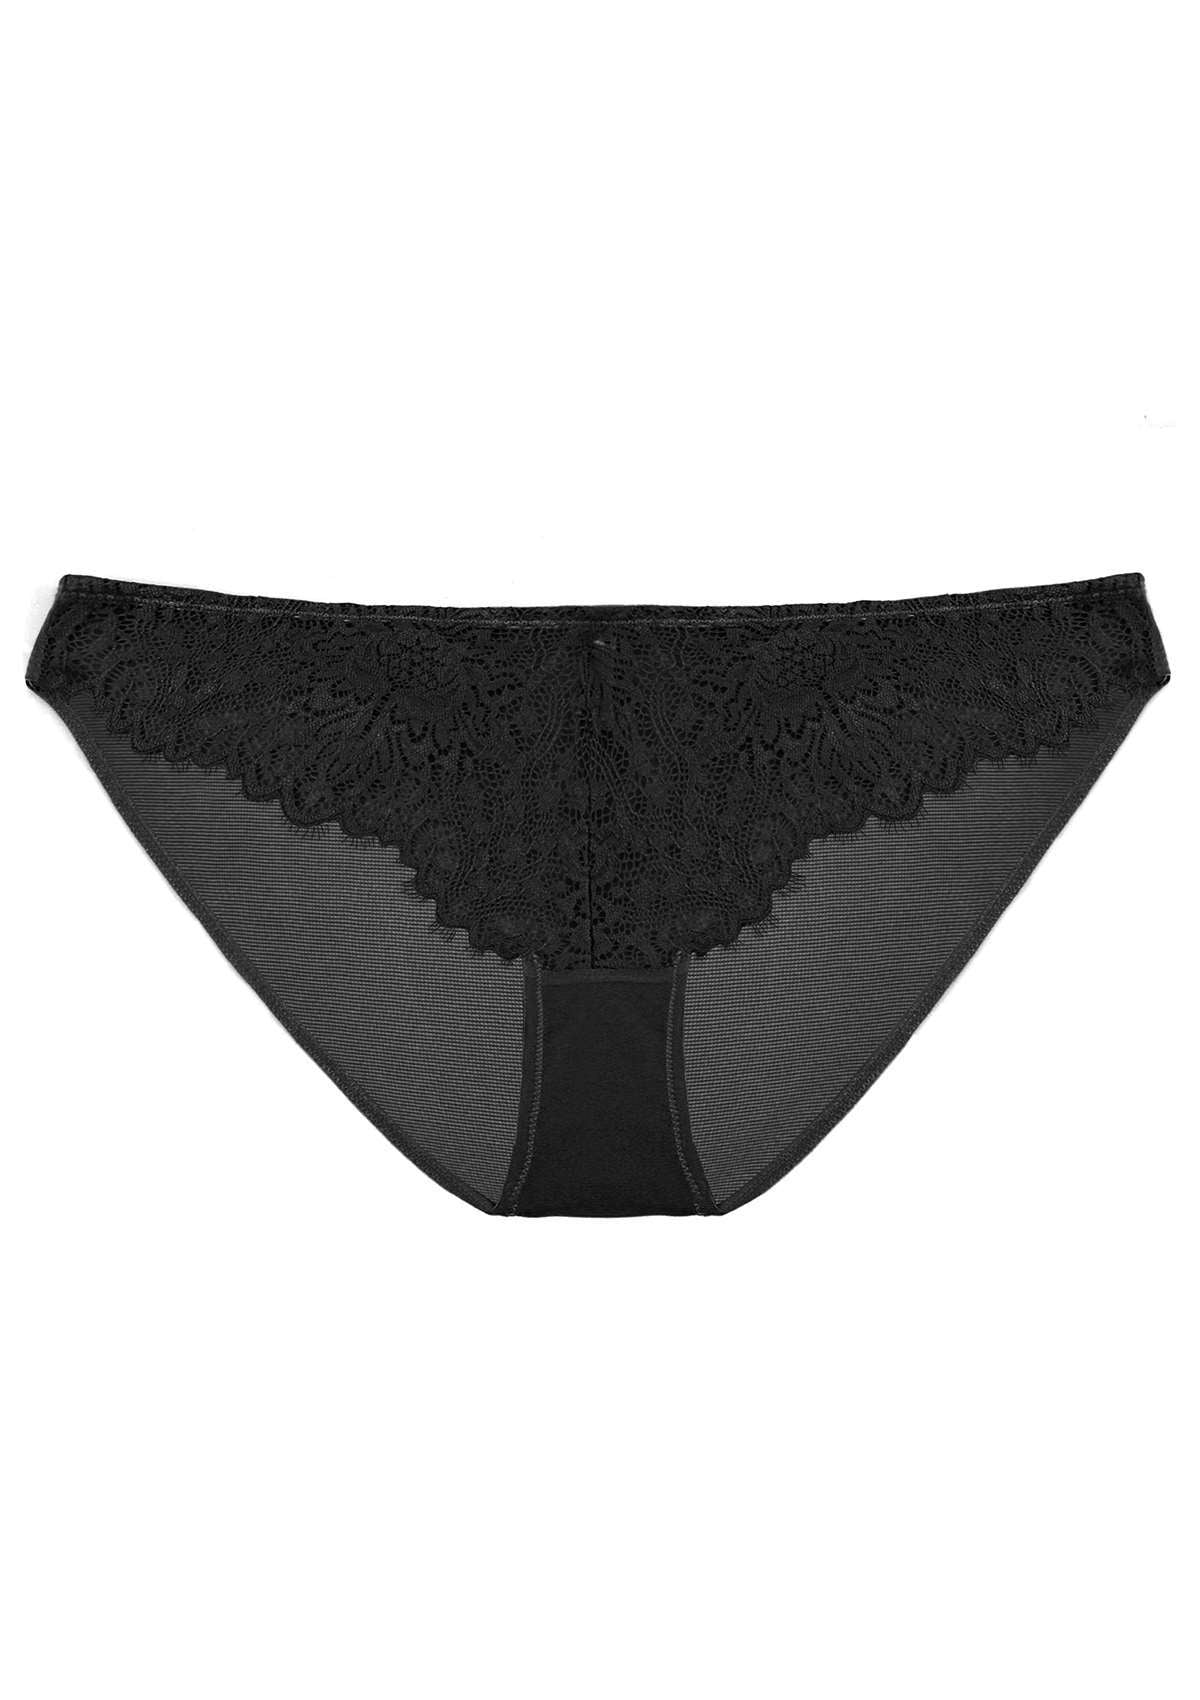 HSIA Sunflower Exquisite Black Bikini Lace Underwear - L / High-Rise Brief / Black